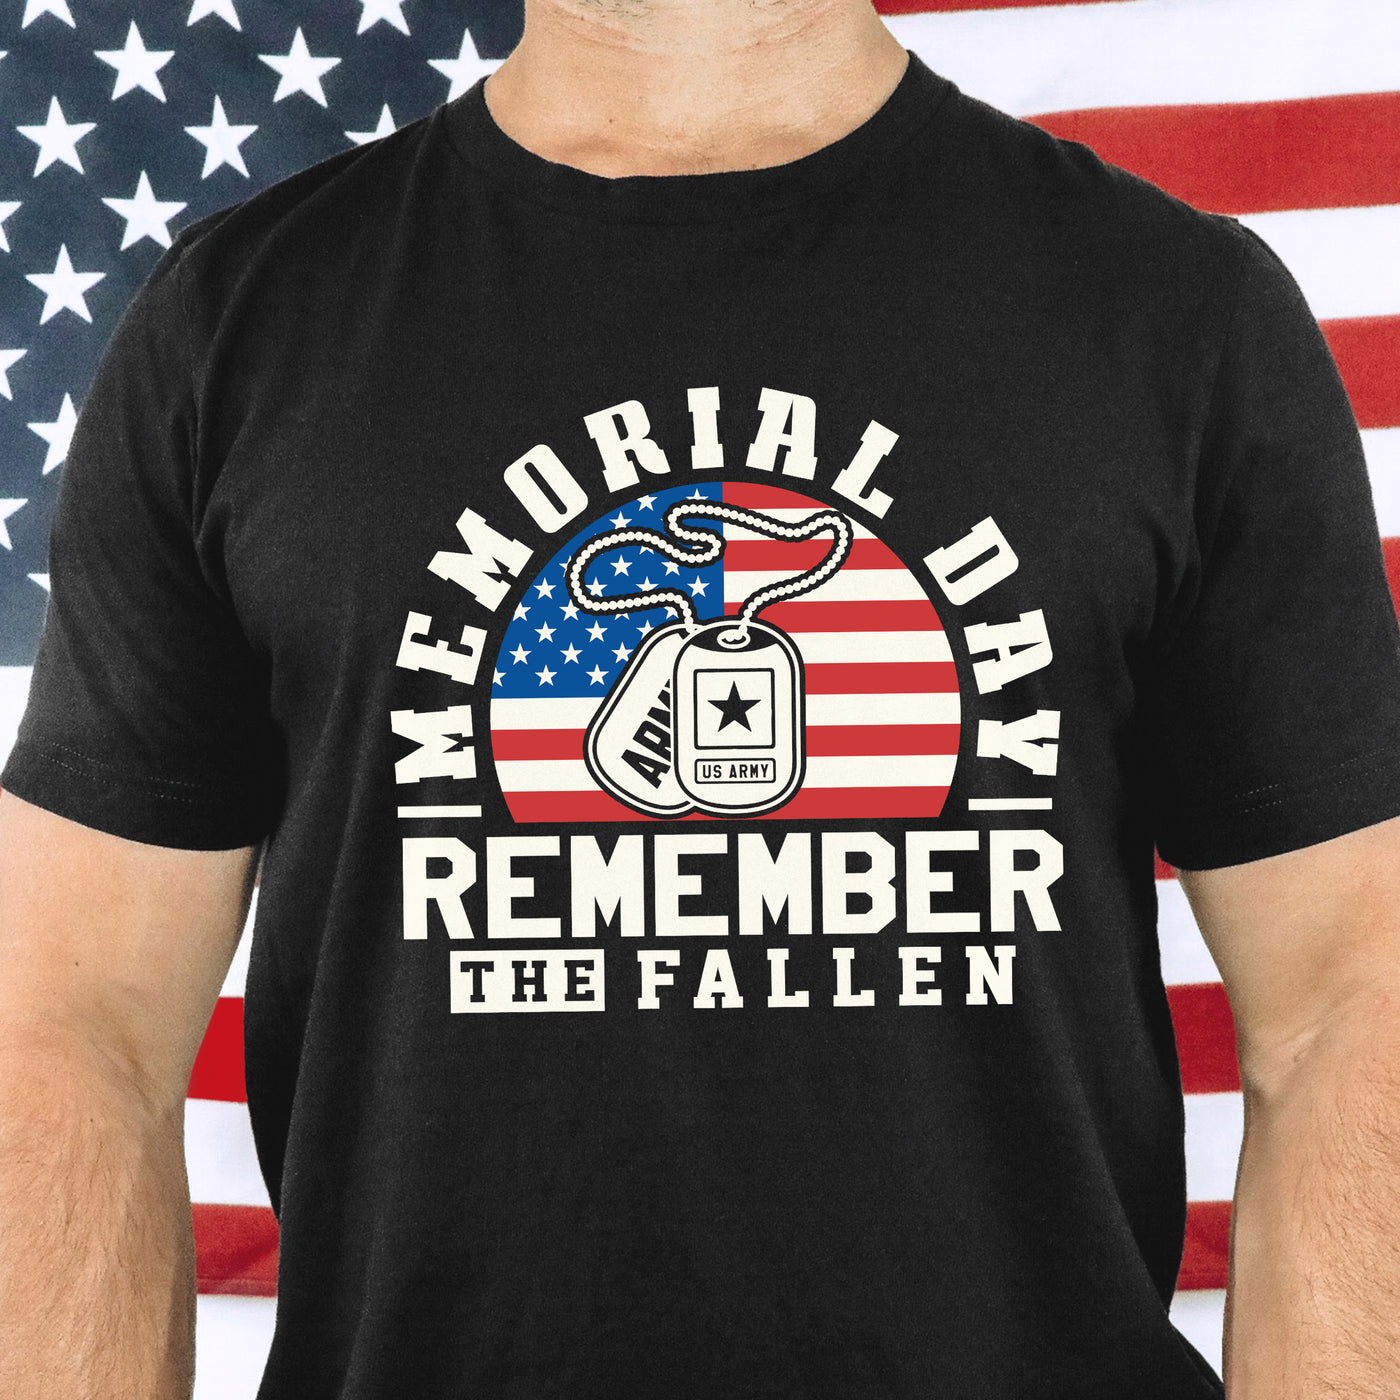 Memorial Day Dog Tags T-shirt